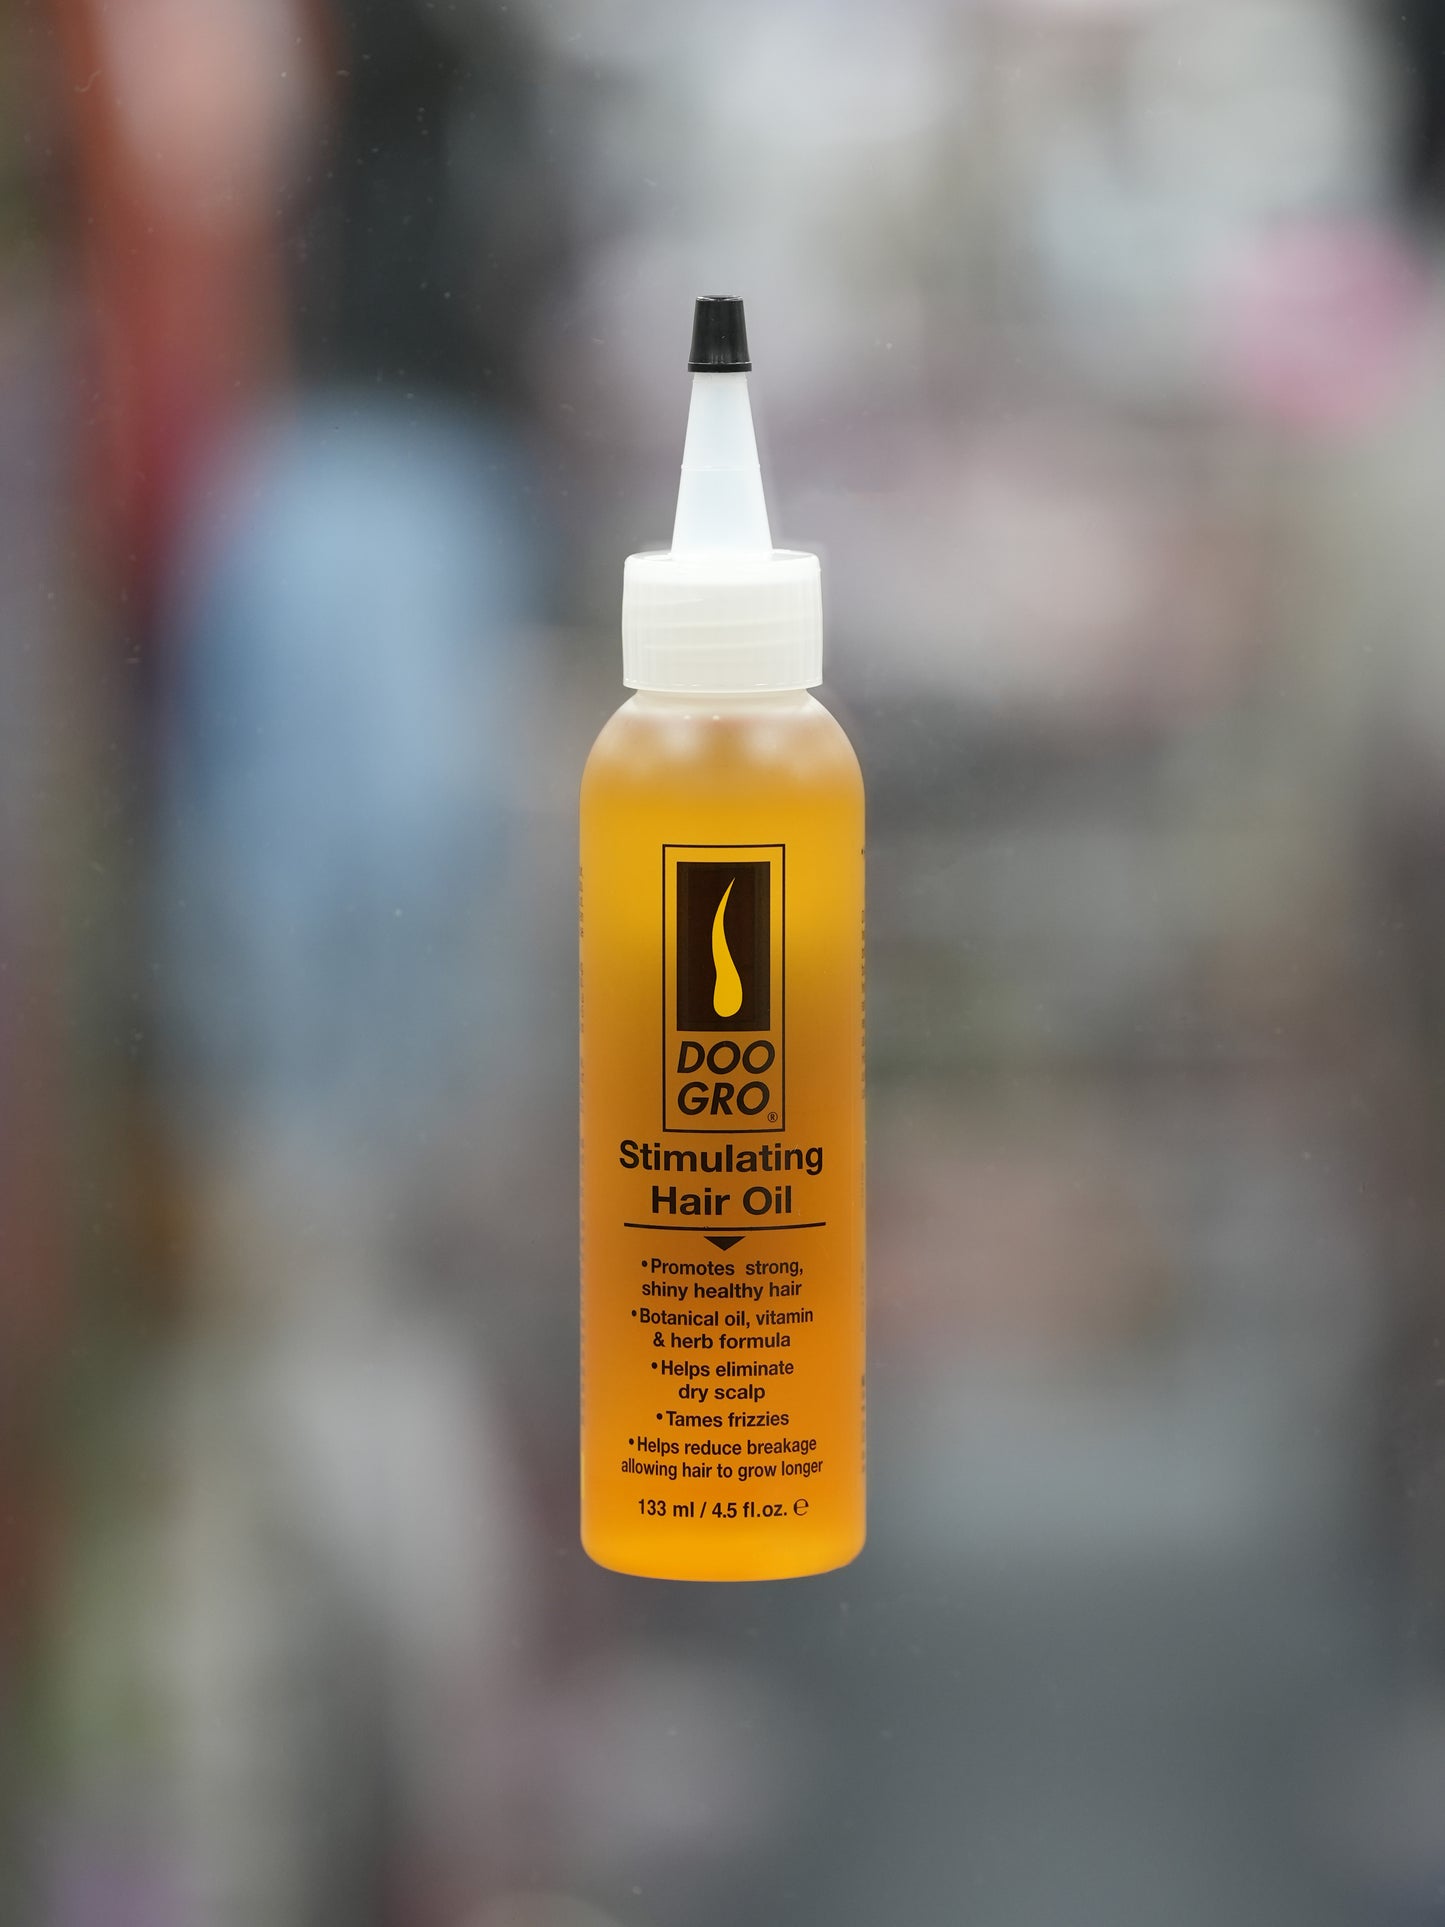 Doo Gro® Stimulating Hair Oil 4.5 oz.